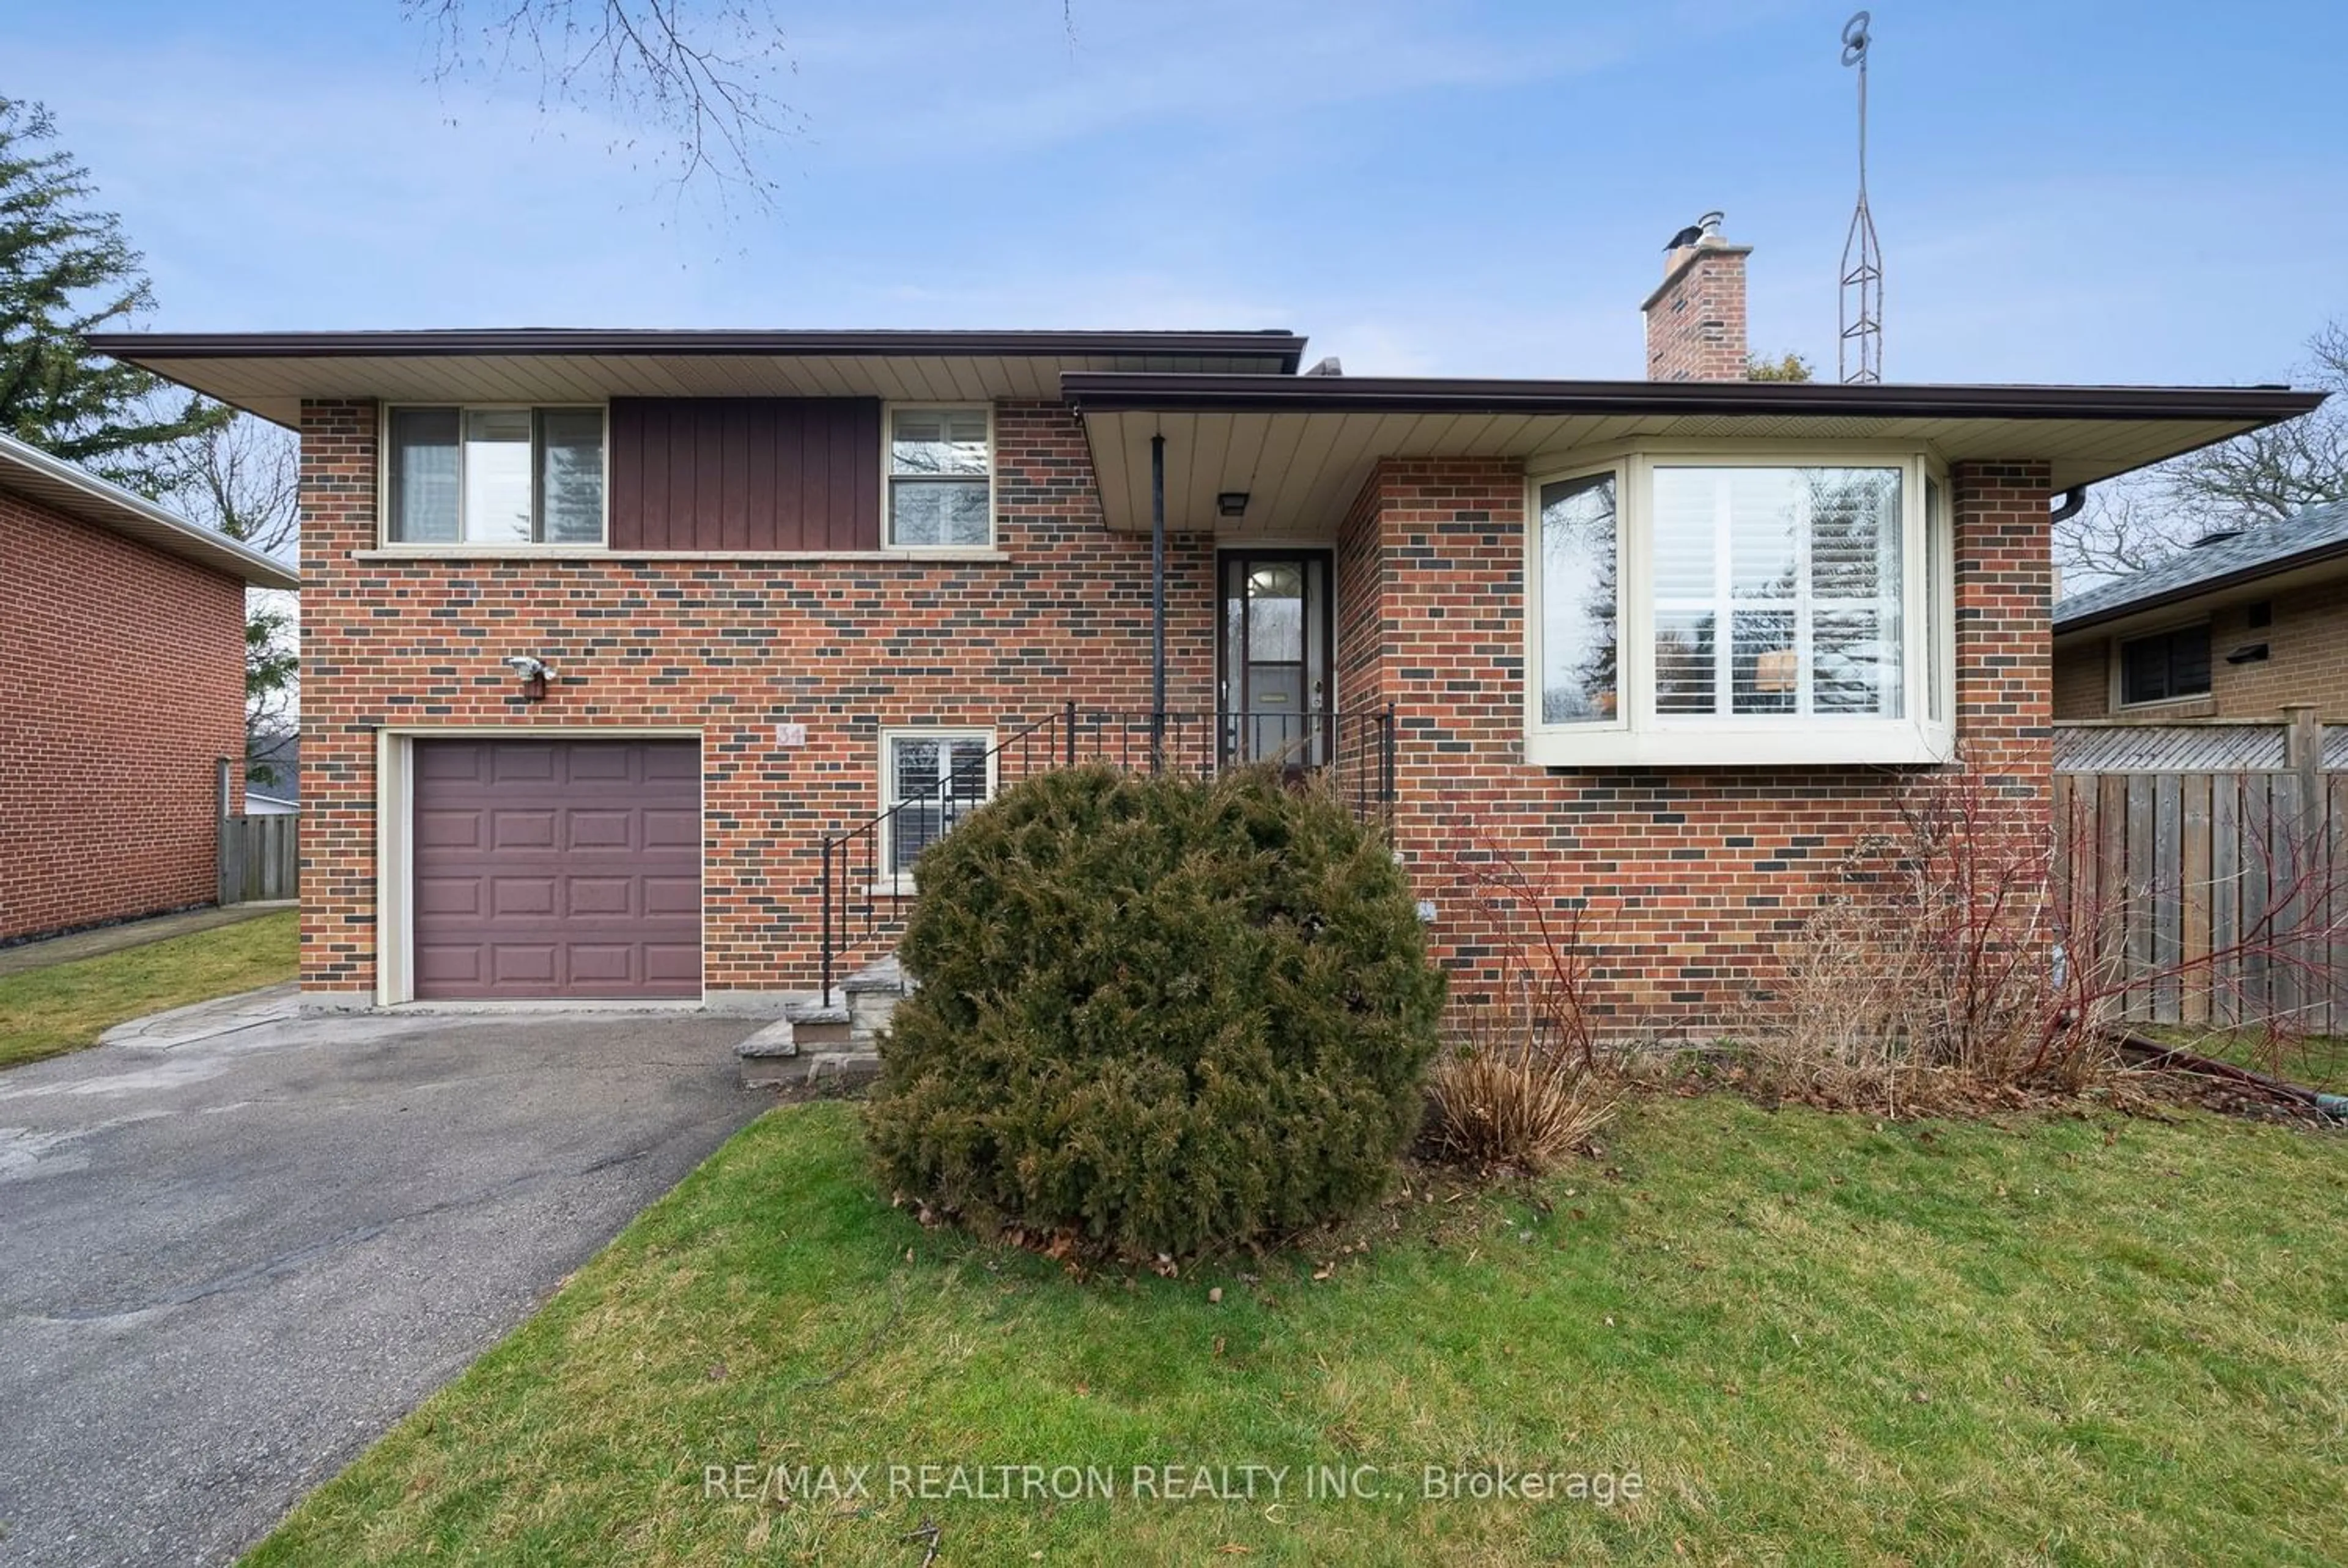 Home with brick exterior material for 34 Purley Cres, Toronto Ontario M1M 1E8